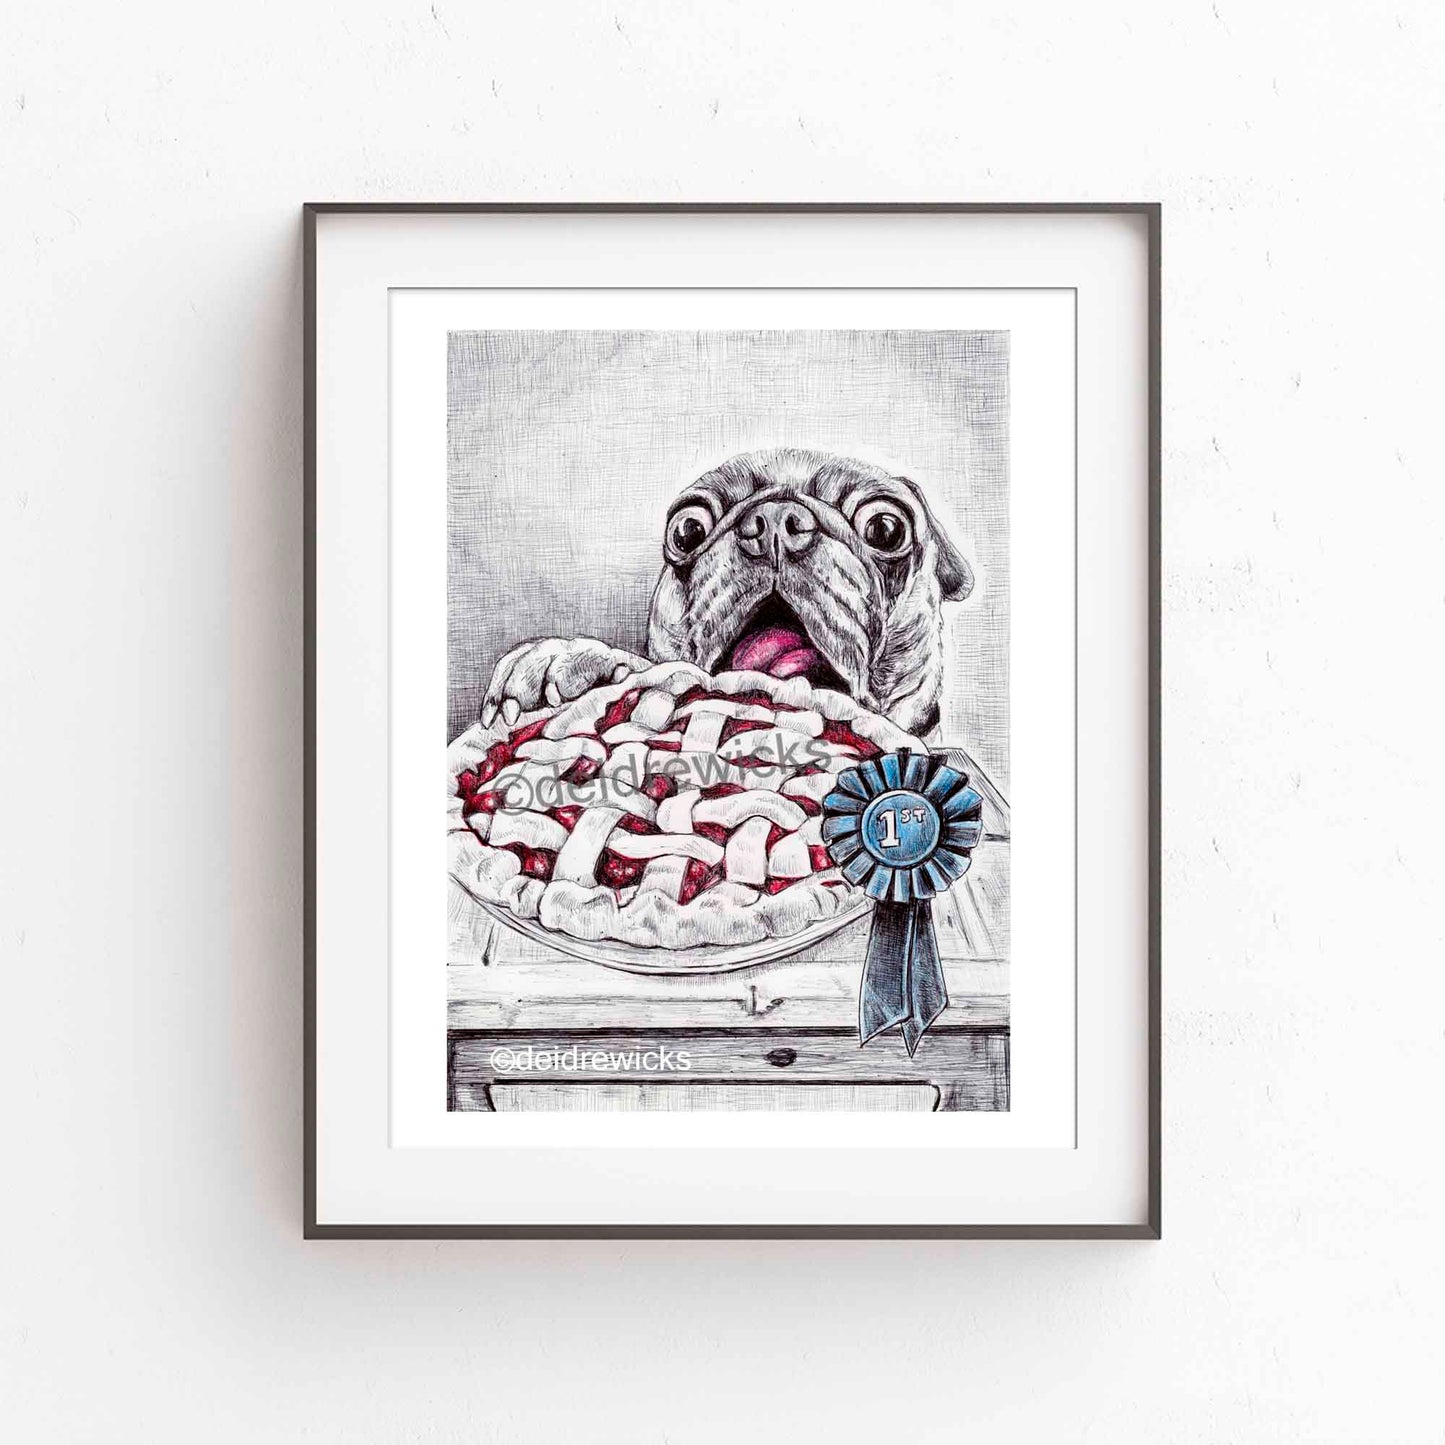 Framed example of a ballpoint pug dog print by Deidre Wicks